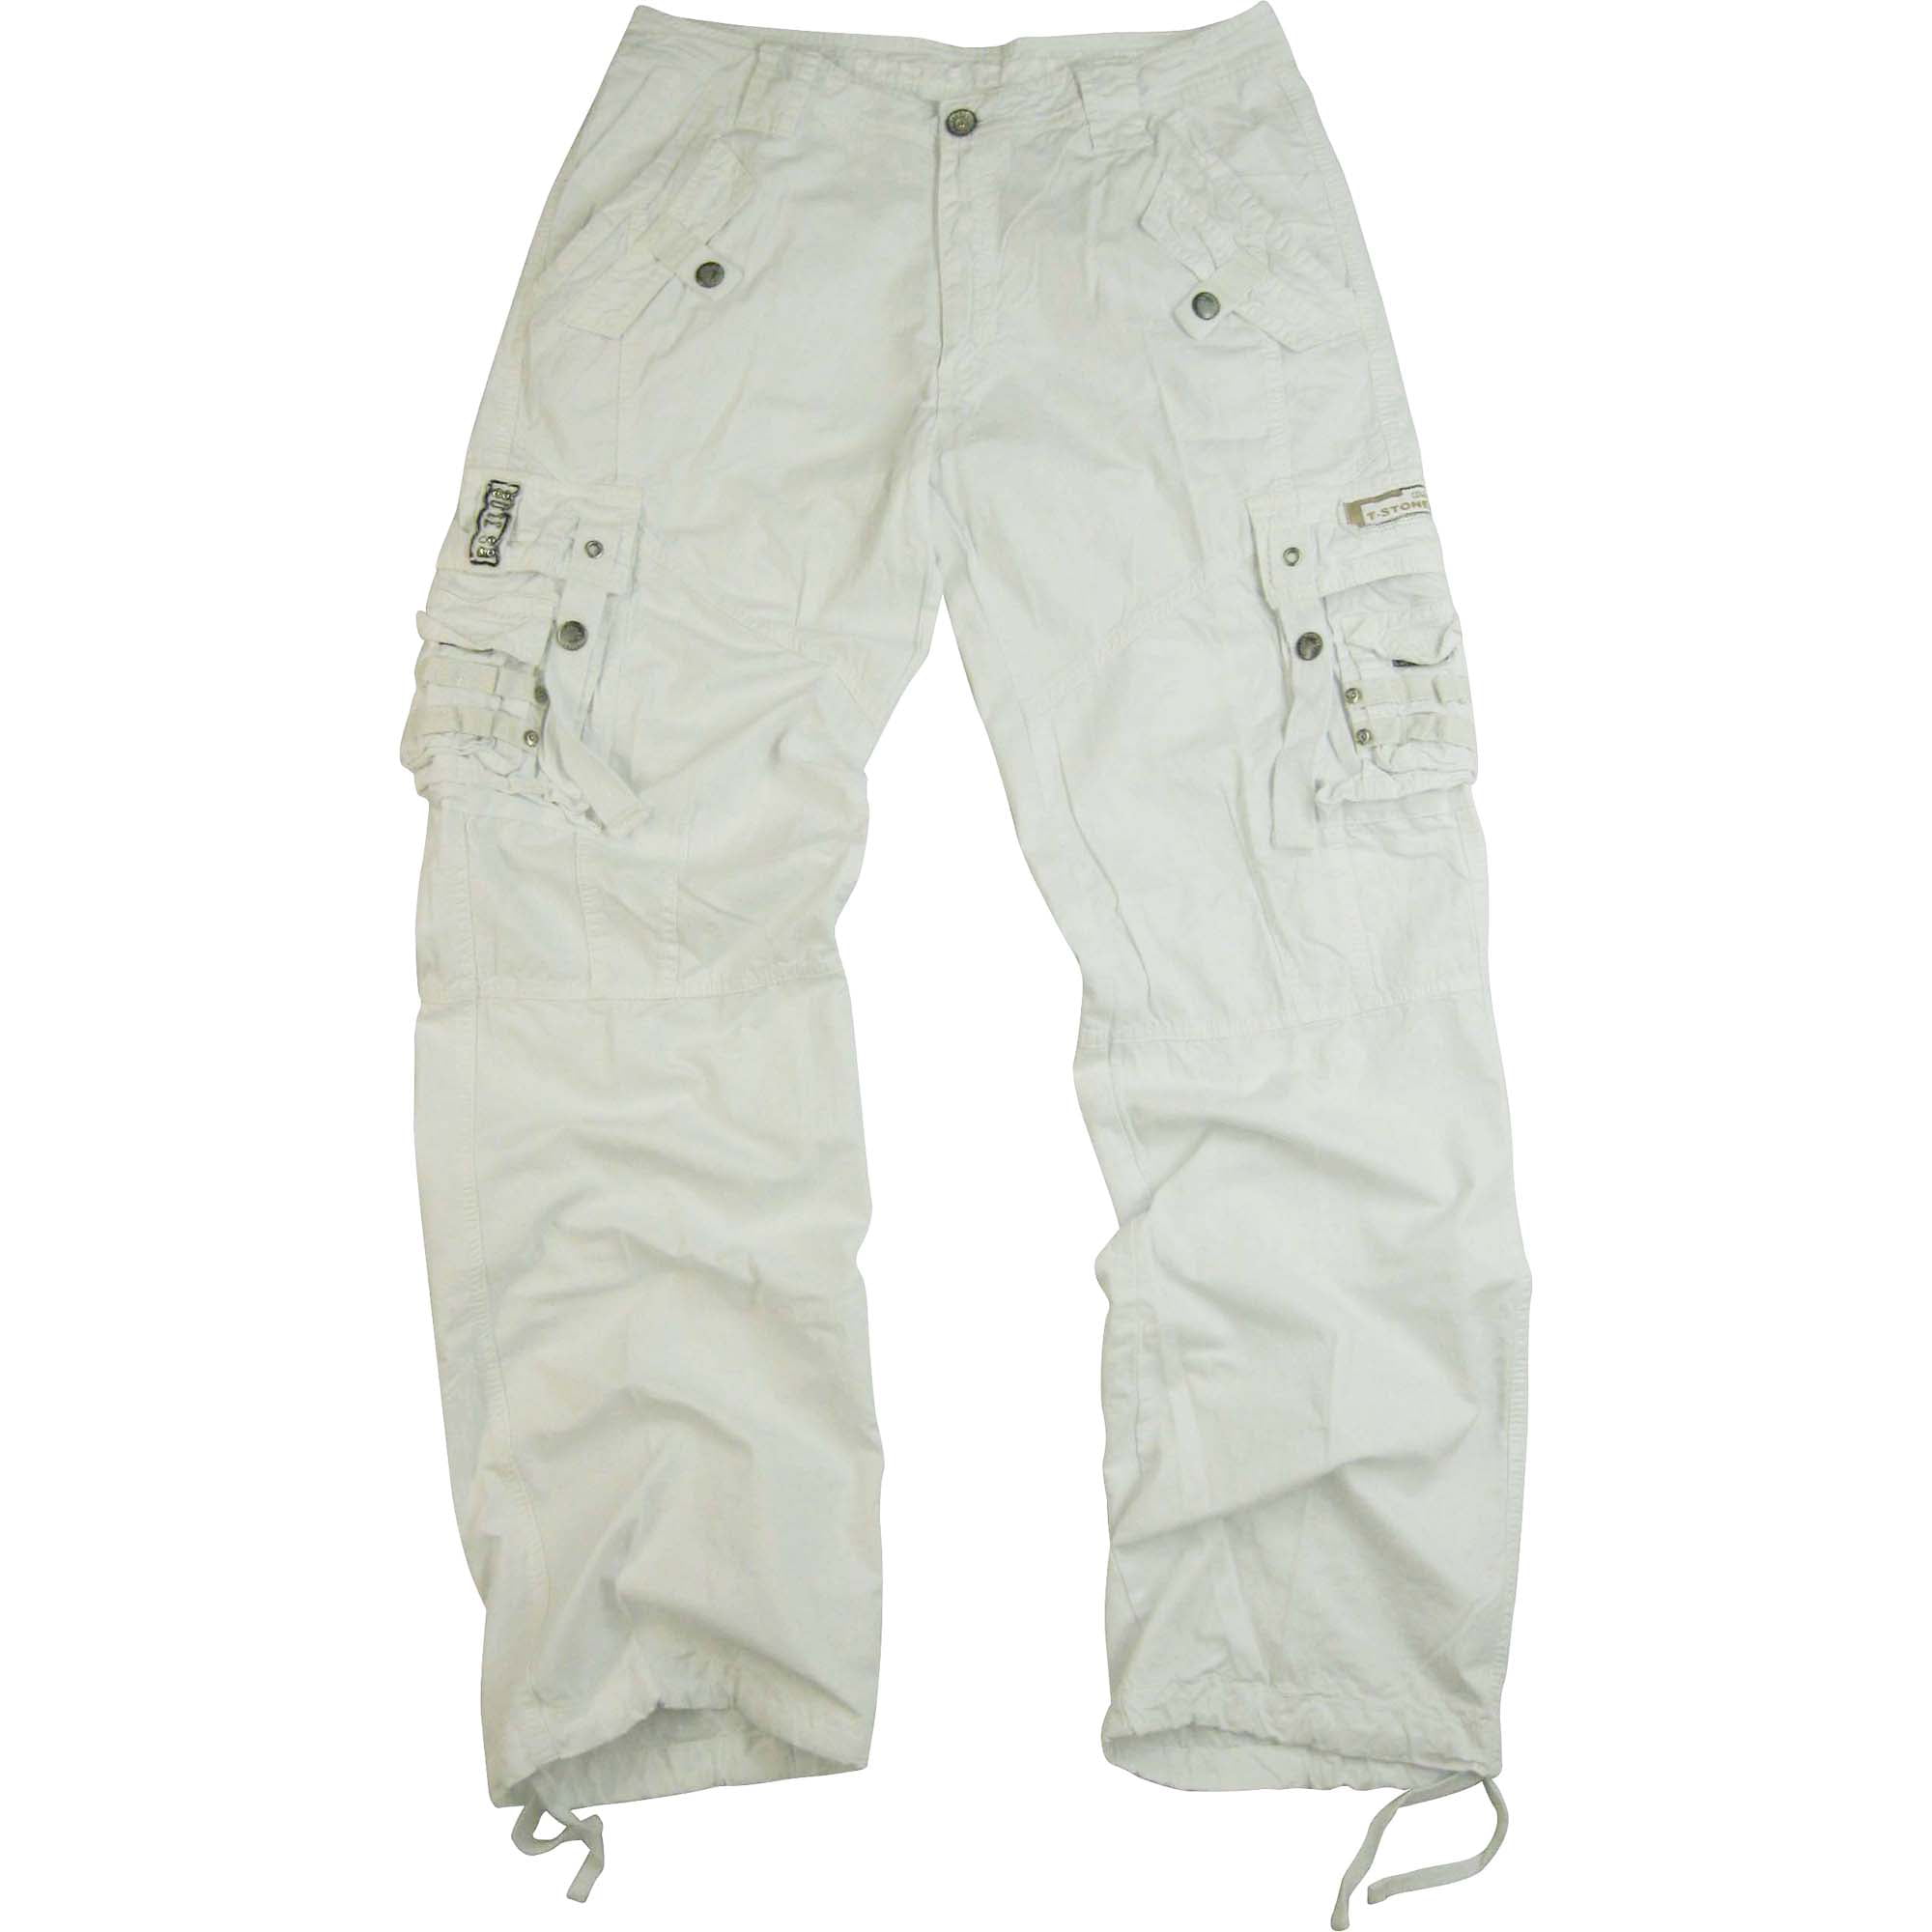 Men's Military Cargo Pants 32x34 White #12211 - Walmart.com